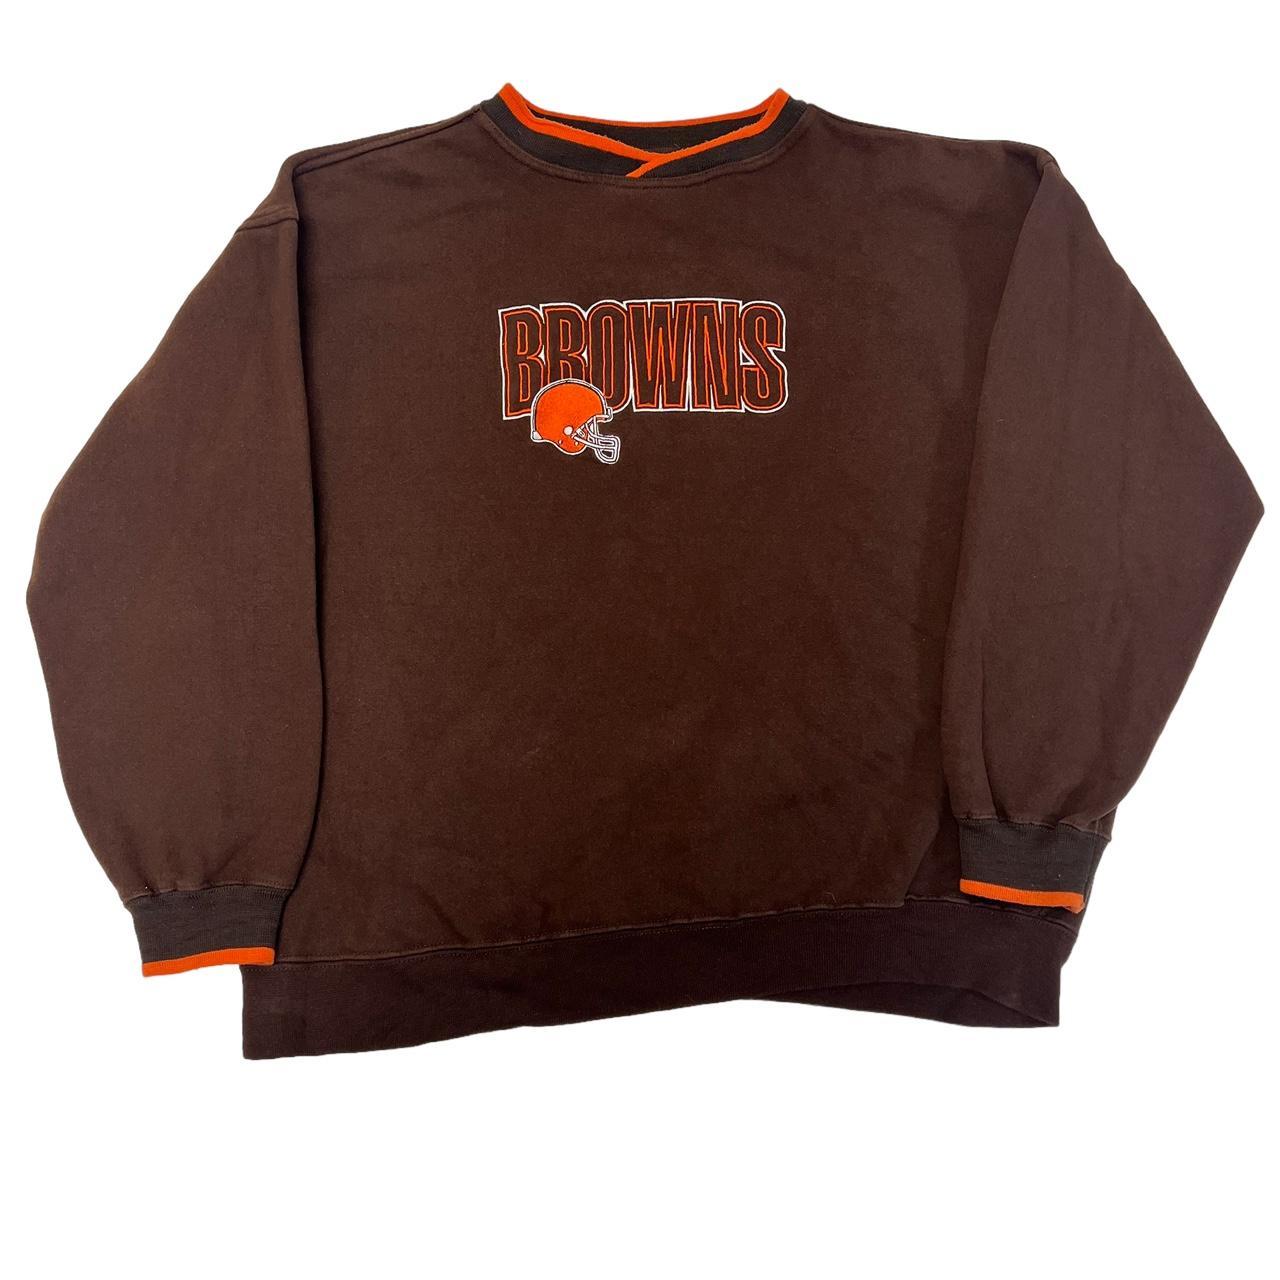 retro browns sweatshirt